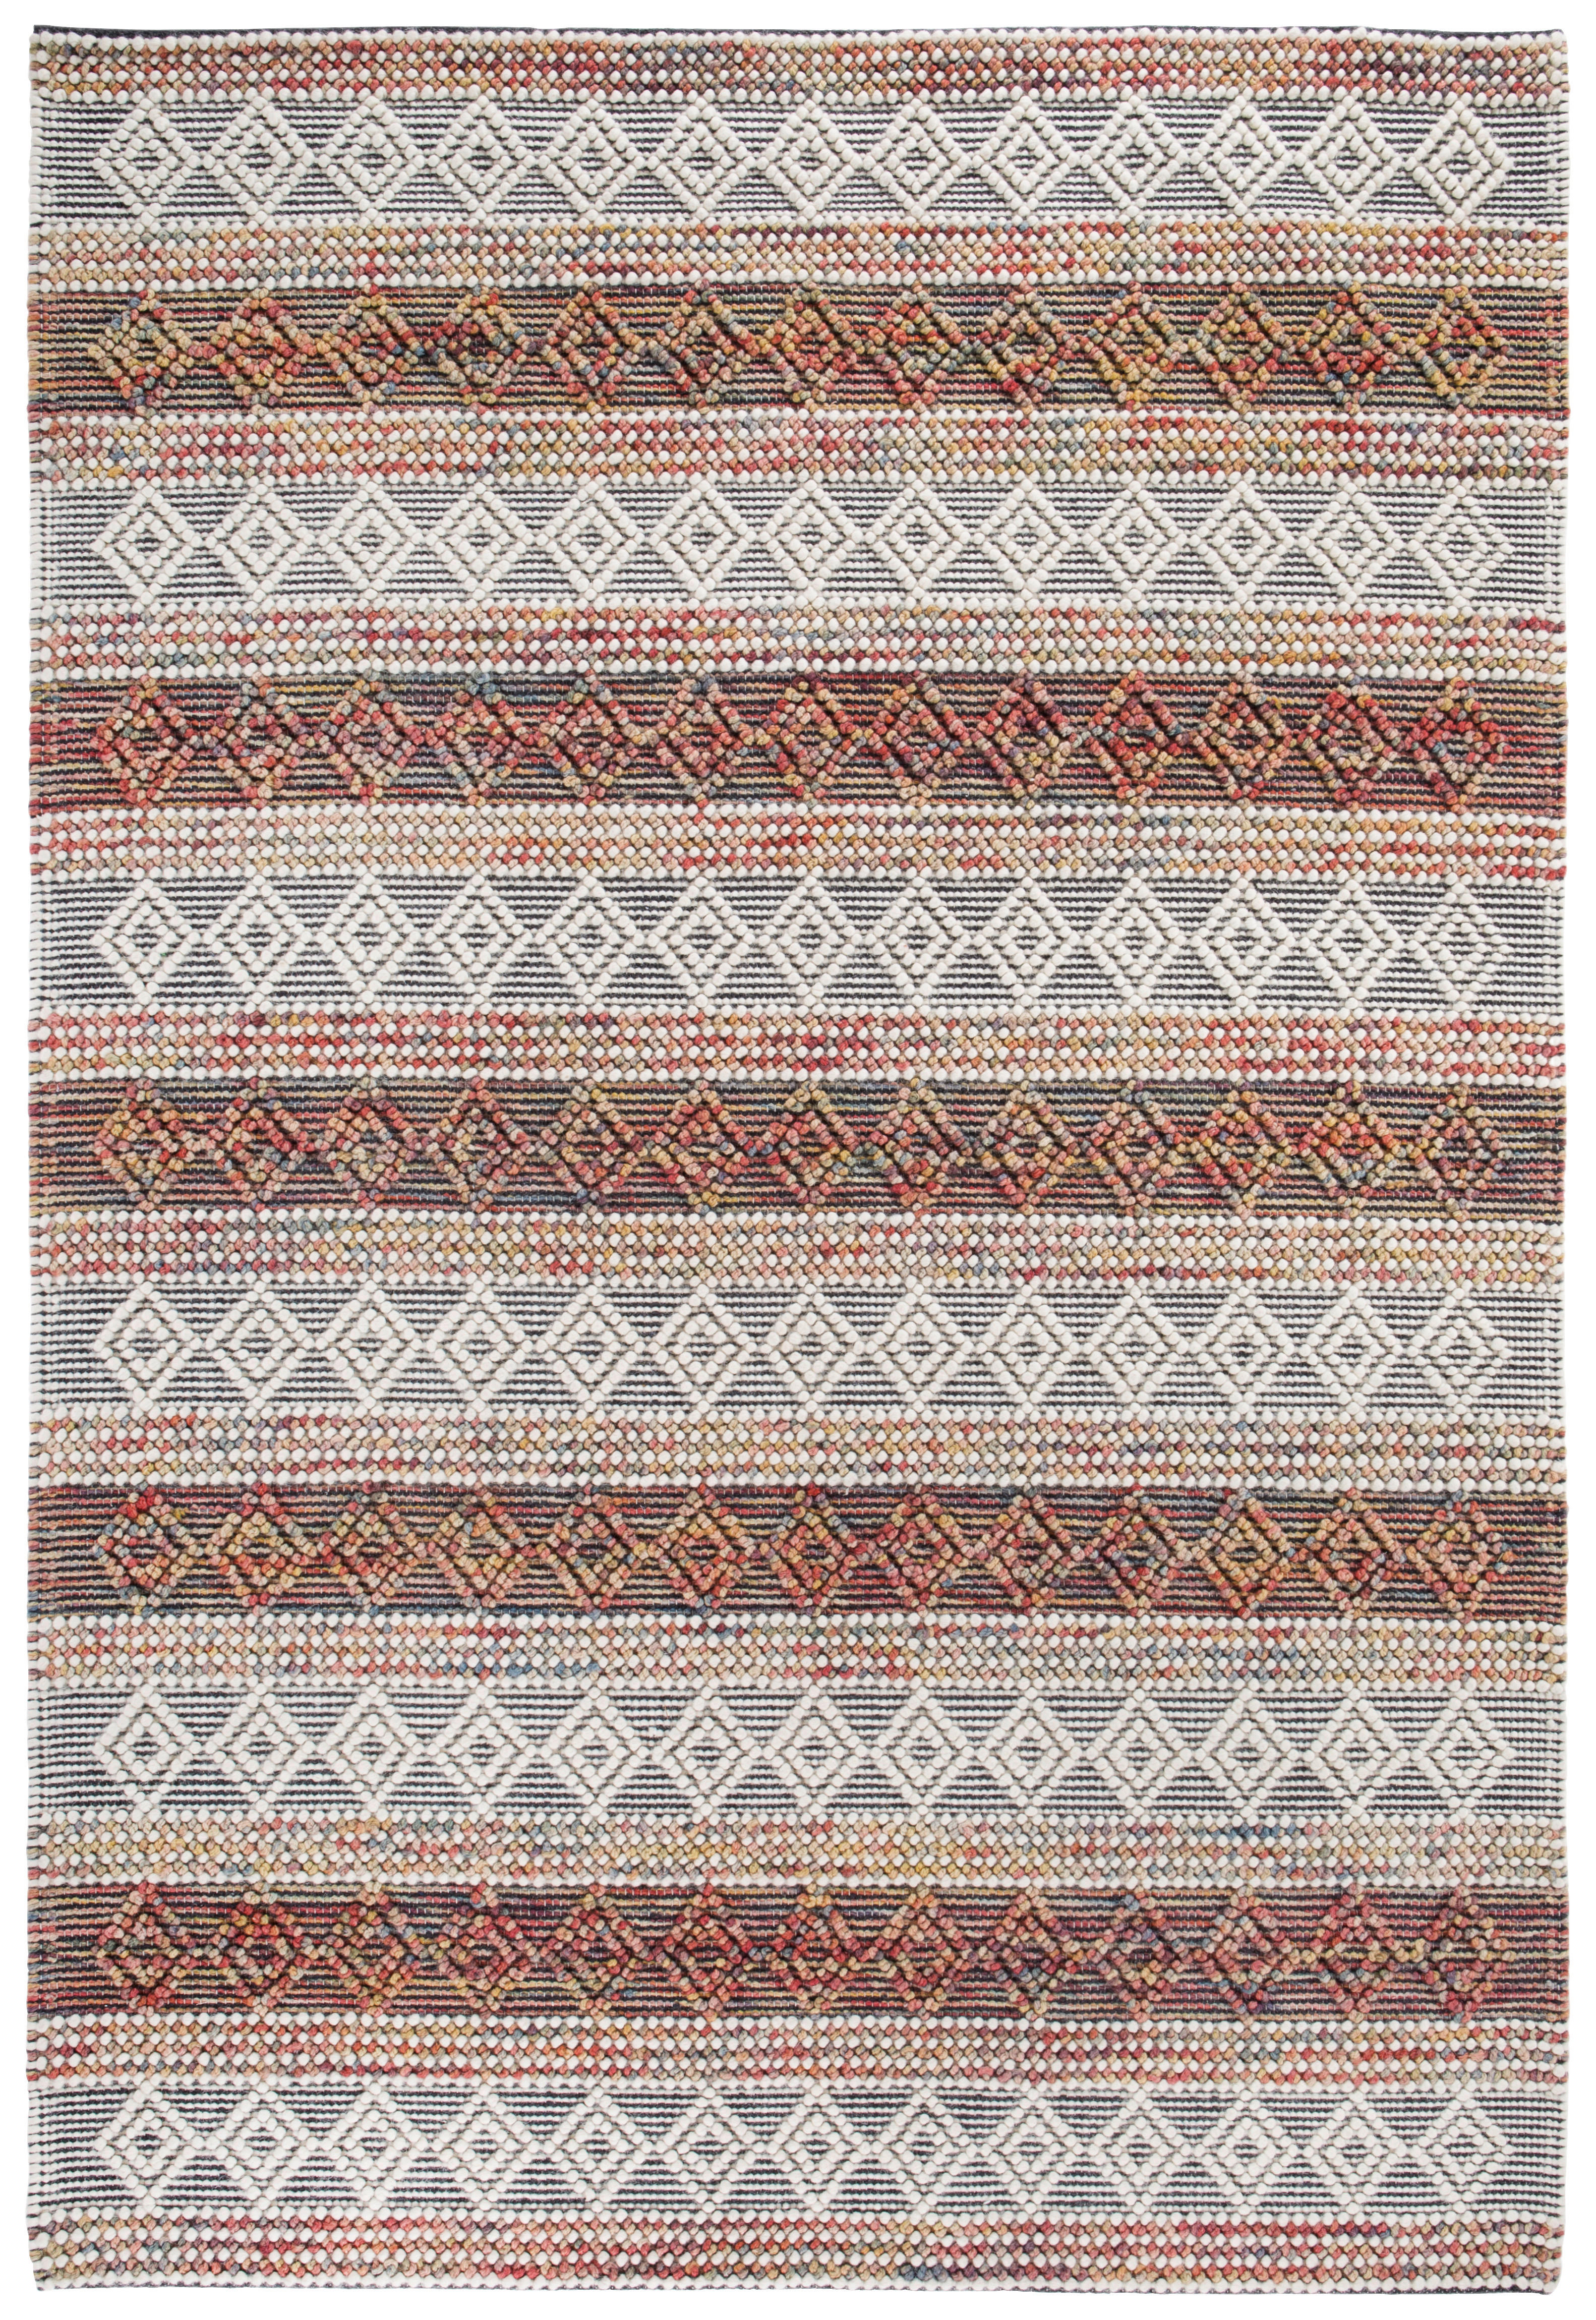 WOLLTEPPICH - Multicolor/Creme, Design, Naturmaterialien/Textil (70/140cm) - Linea Natura